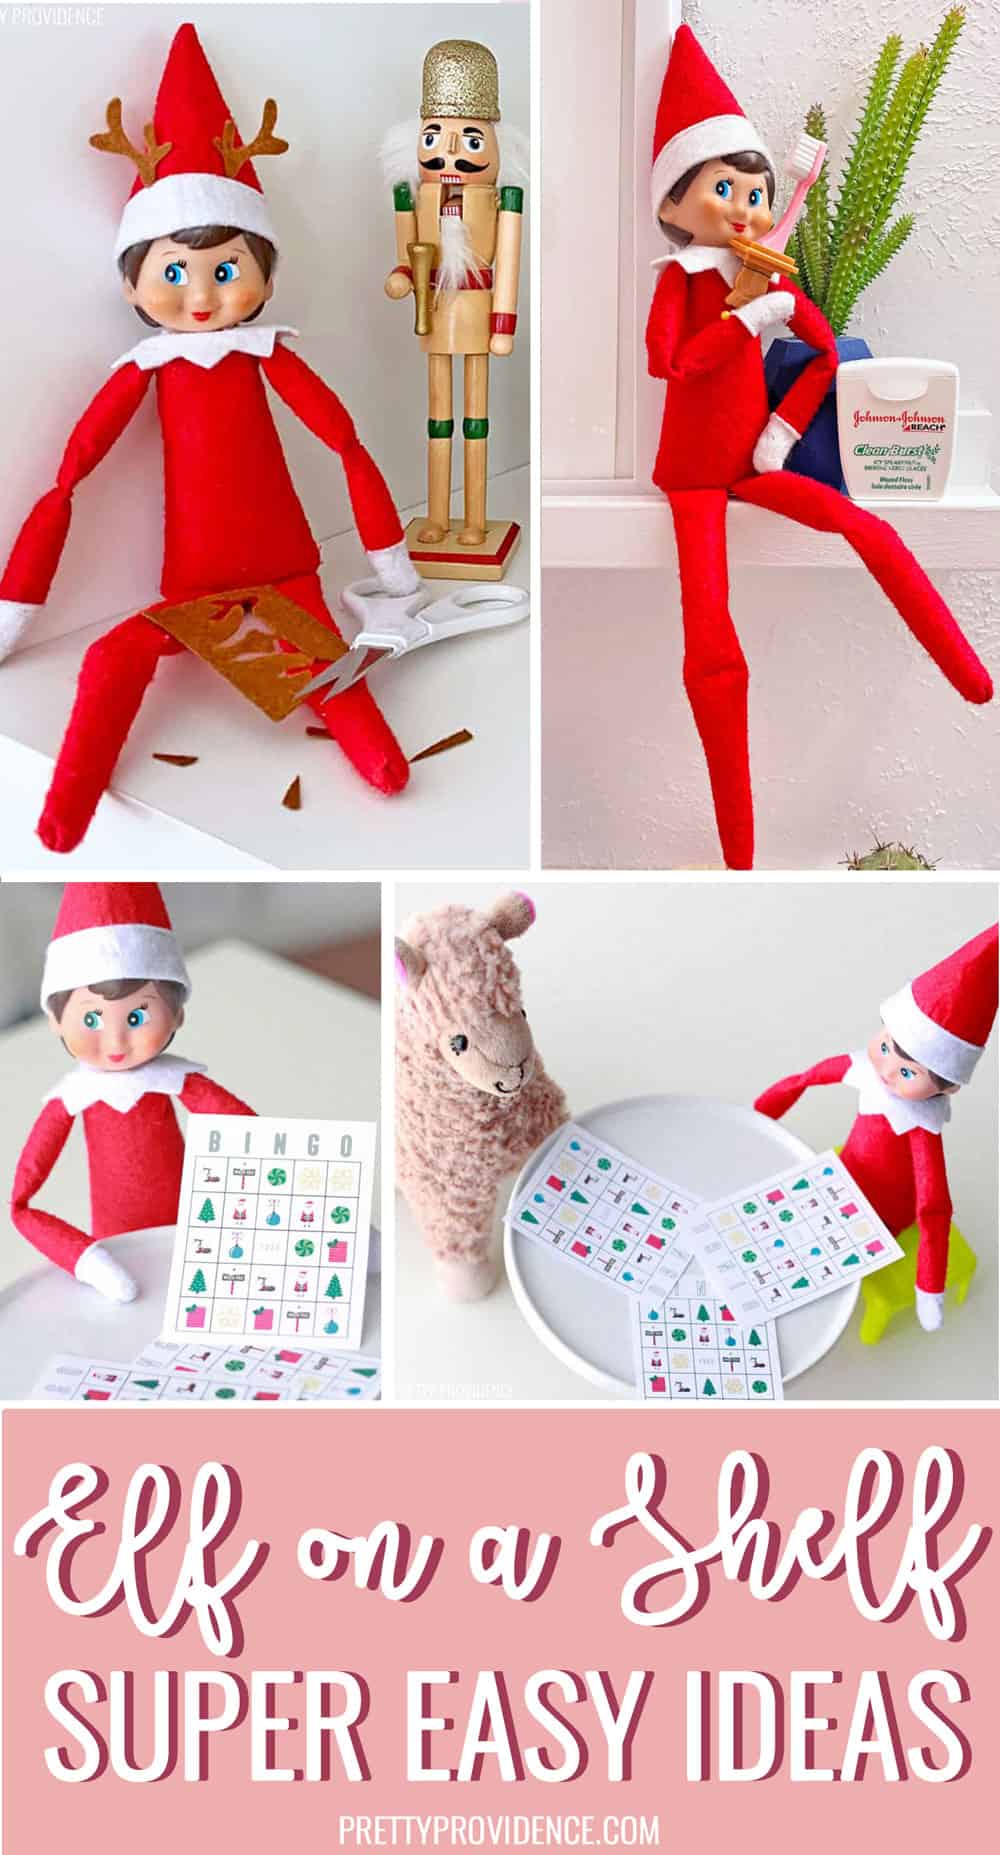 Cute and Funny Elf on the Shelf Ideas